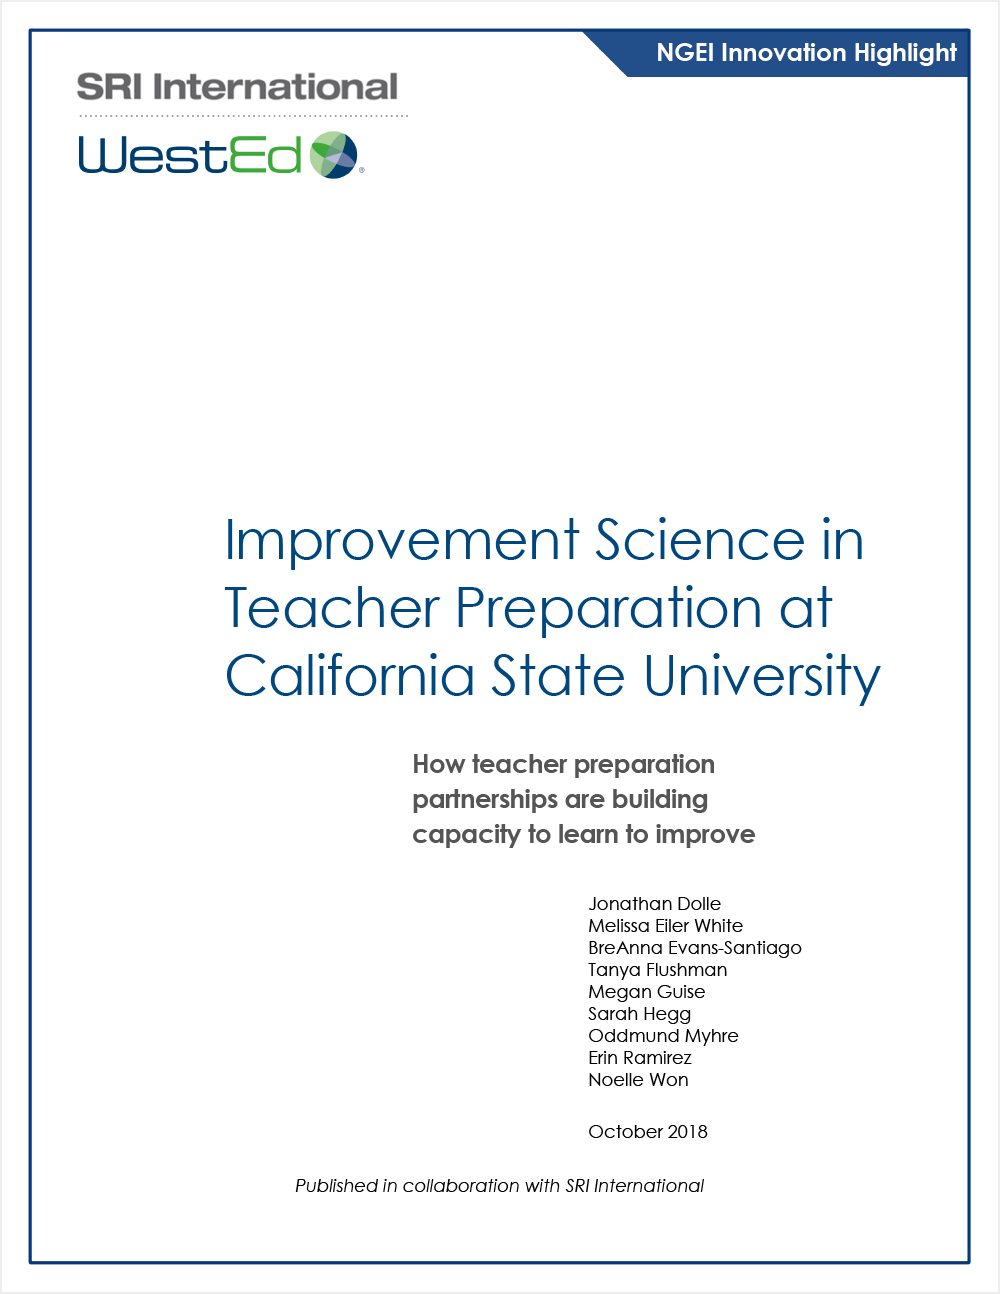 Improvement Science in Teacher Preparation at California State University